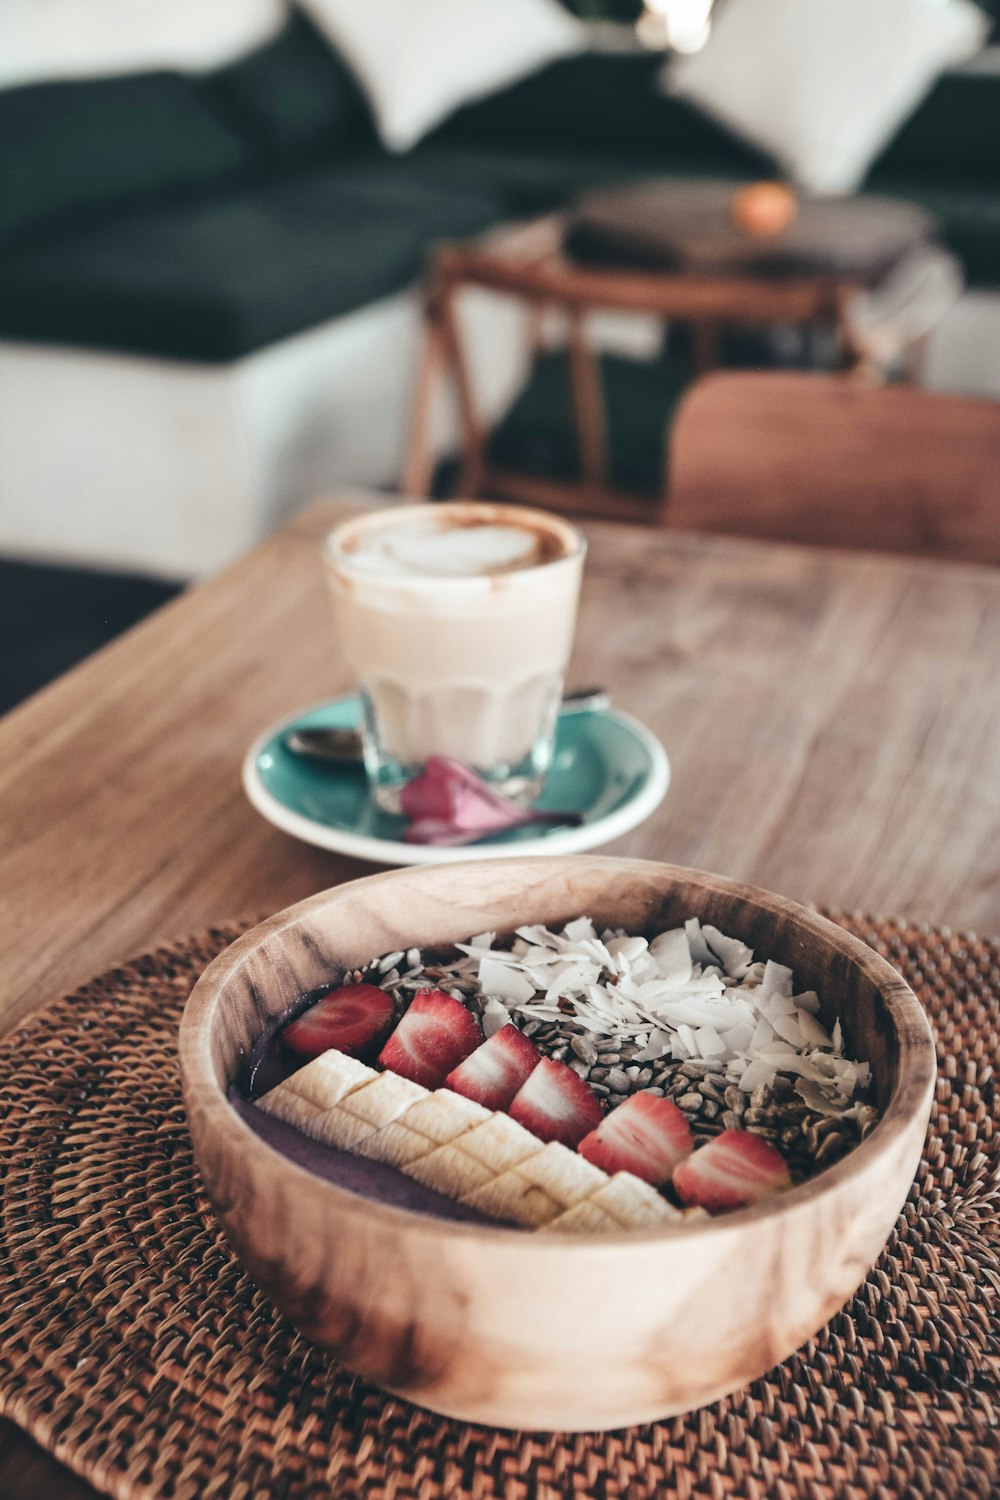 Foodfotografie von geschnittenen Bananen und Erdbeeren neben Reis